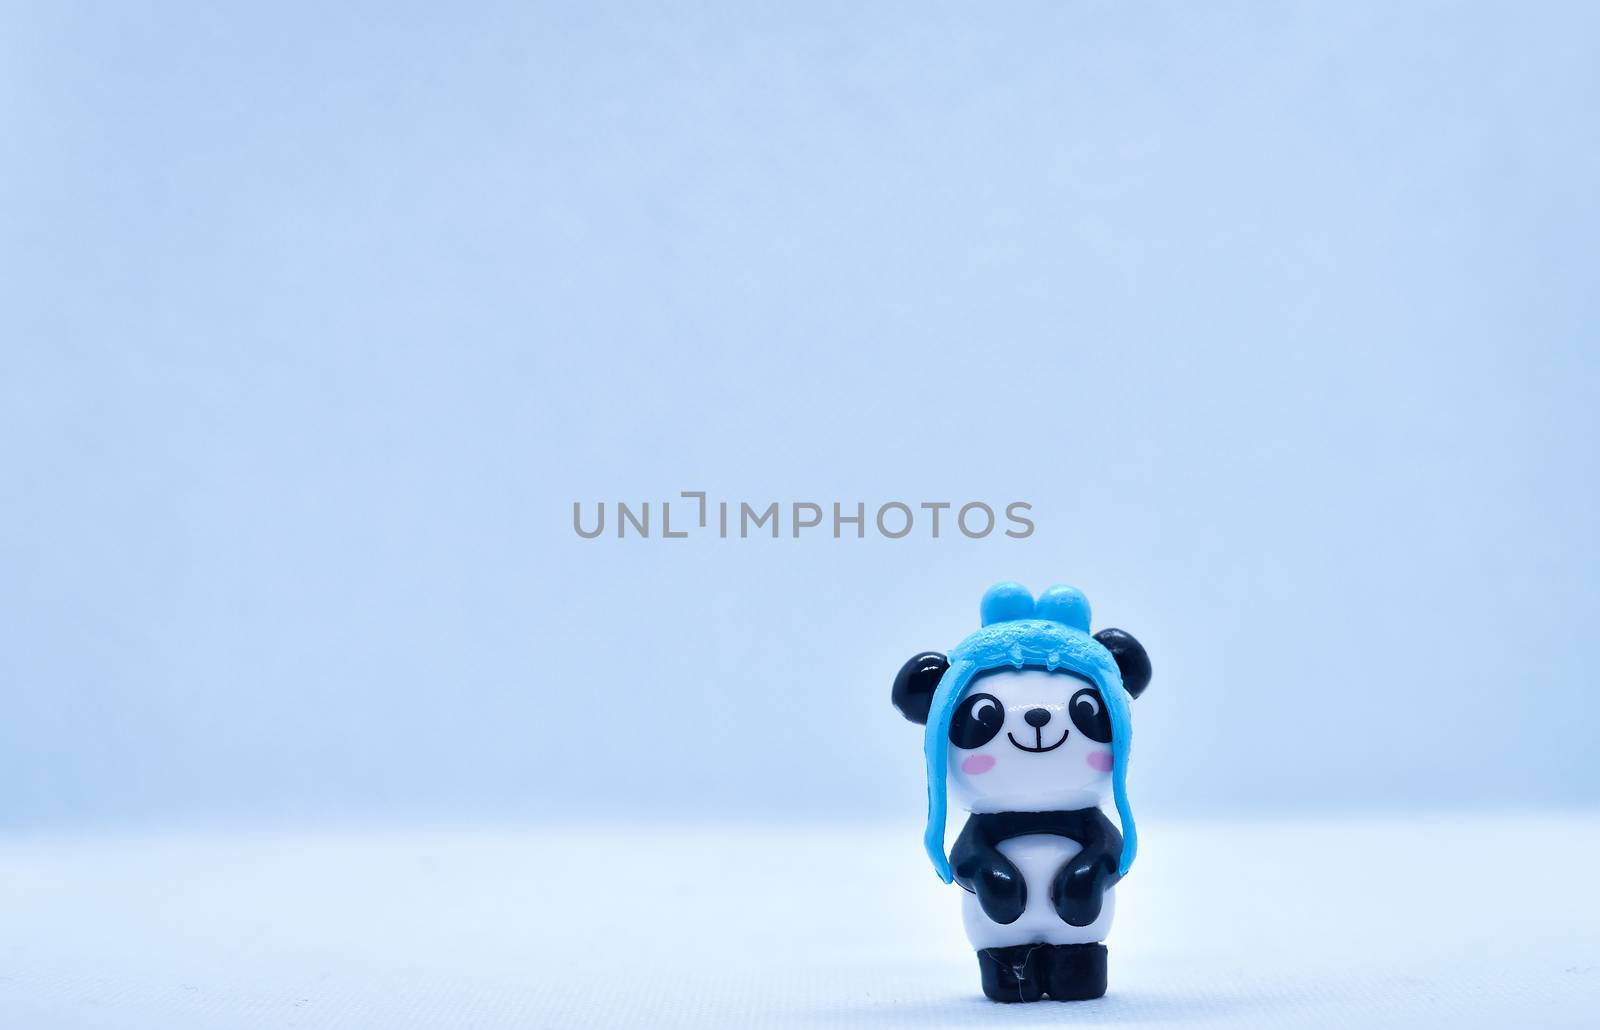 Little panda porcelain figurine isolated on black background